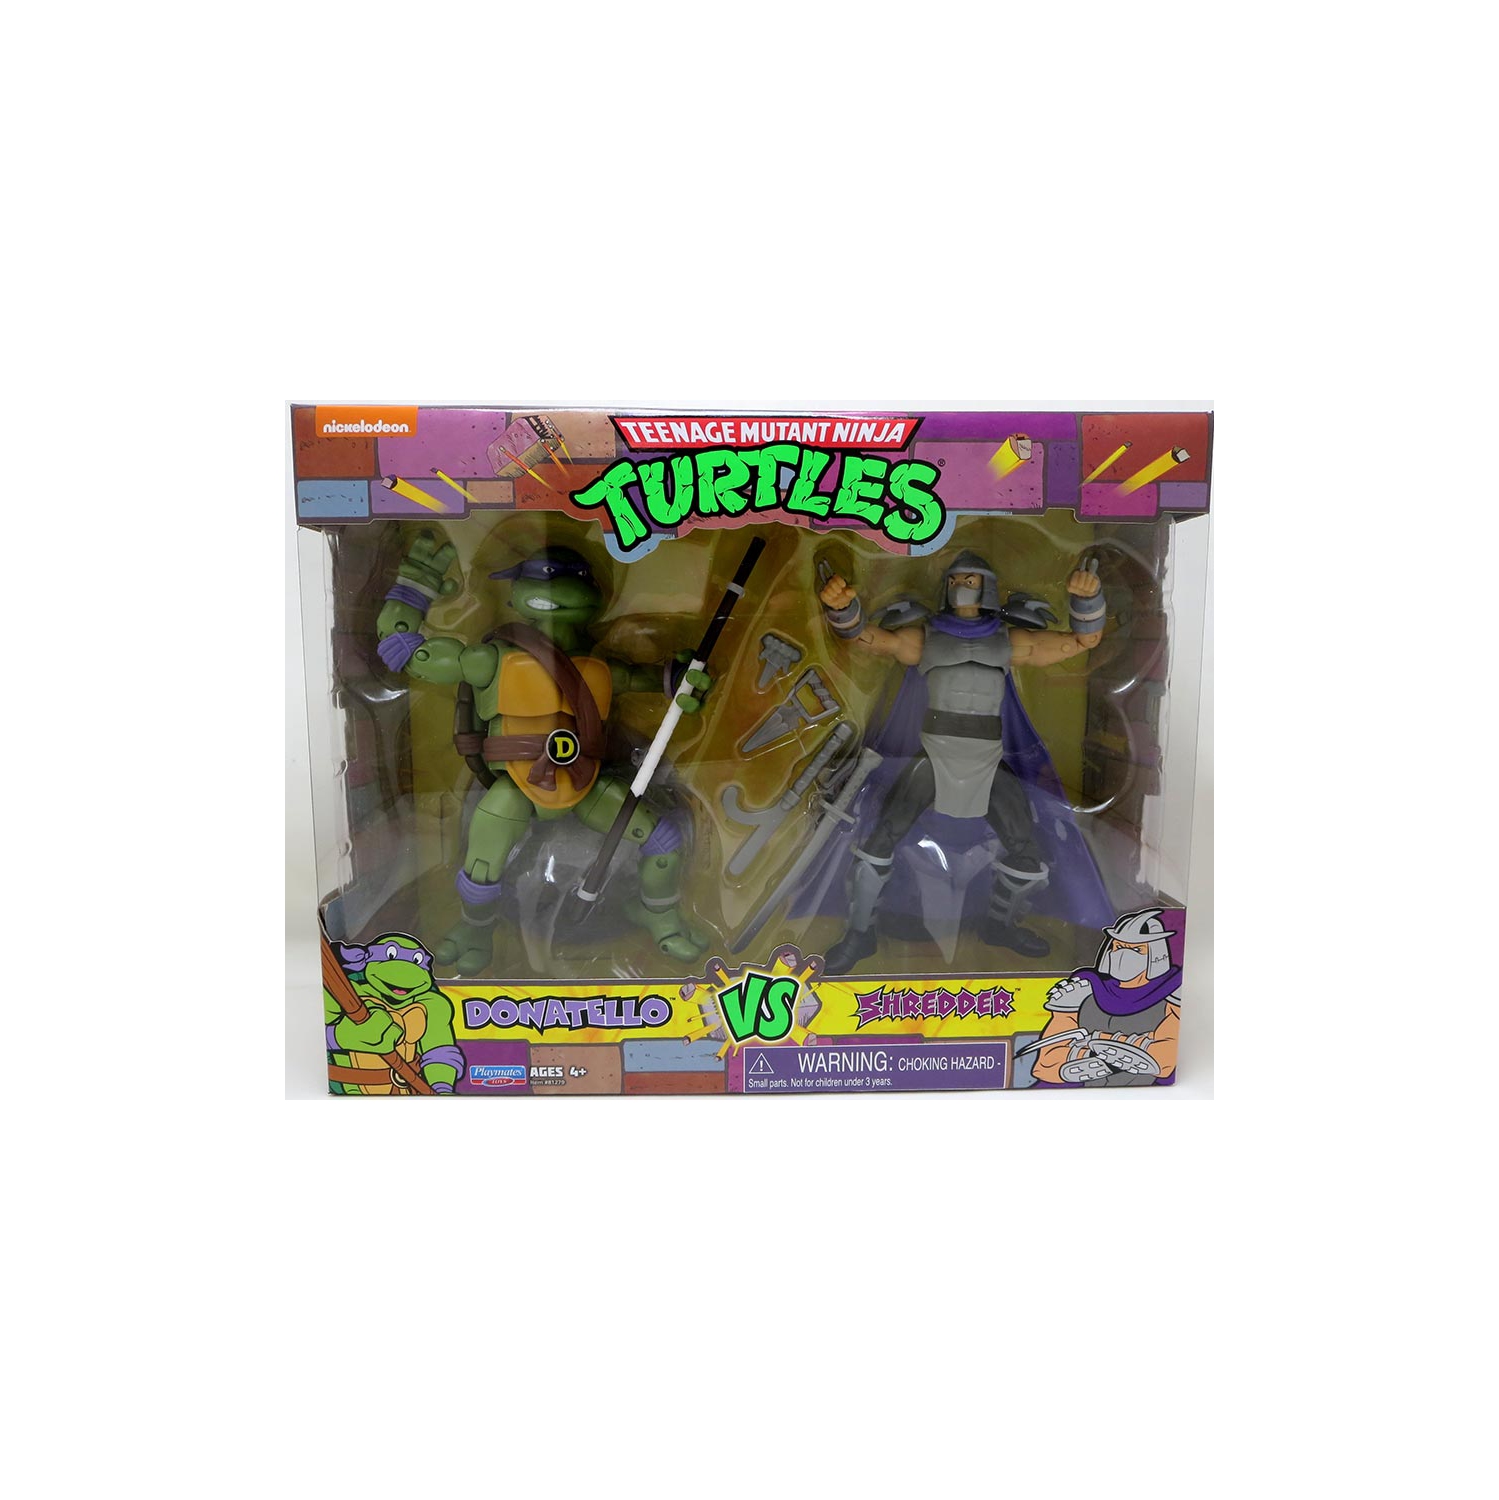 Teenage Mutant Ninja Turtles 6 Inch Action Figure Original TV 2-Pack - Donatello vs Shredder